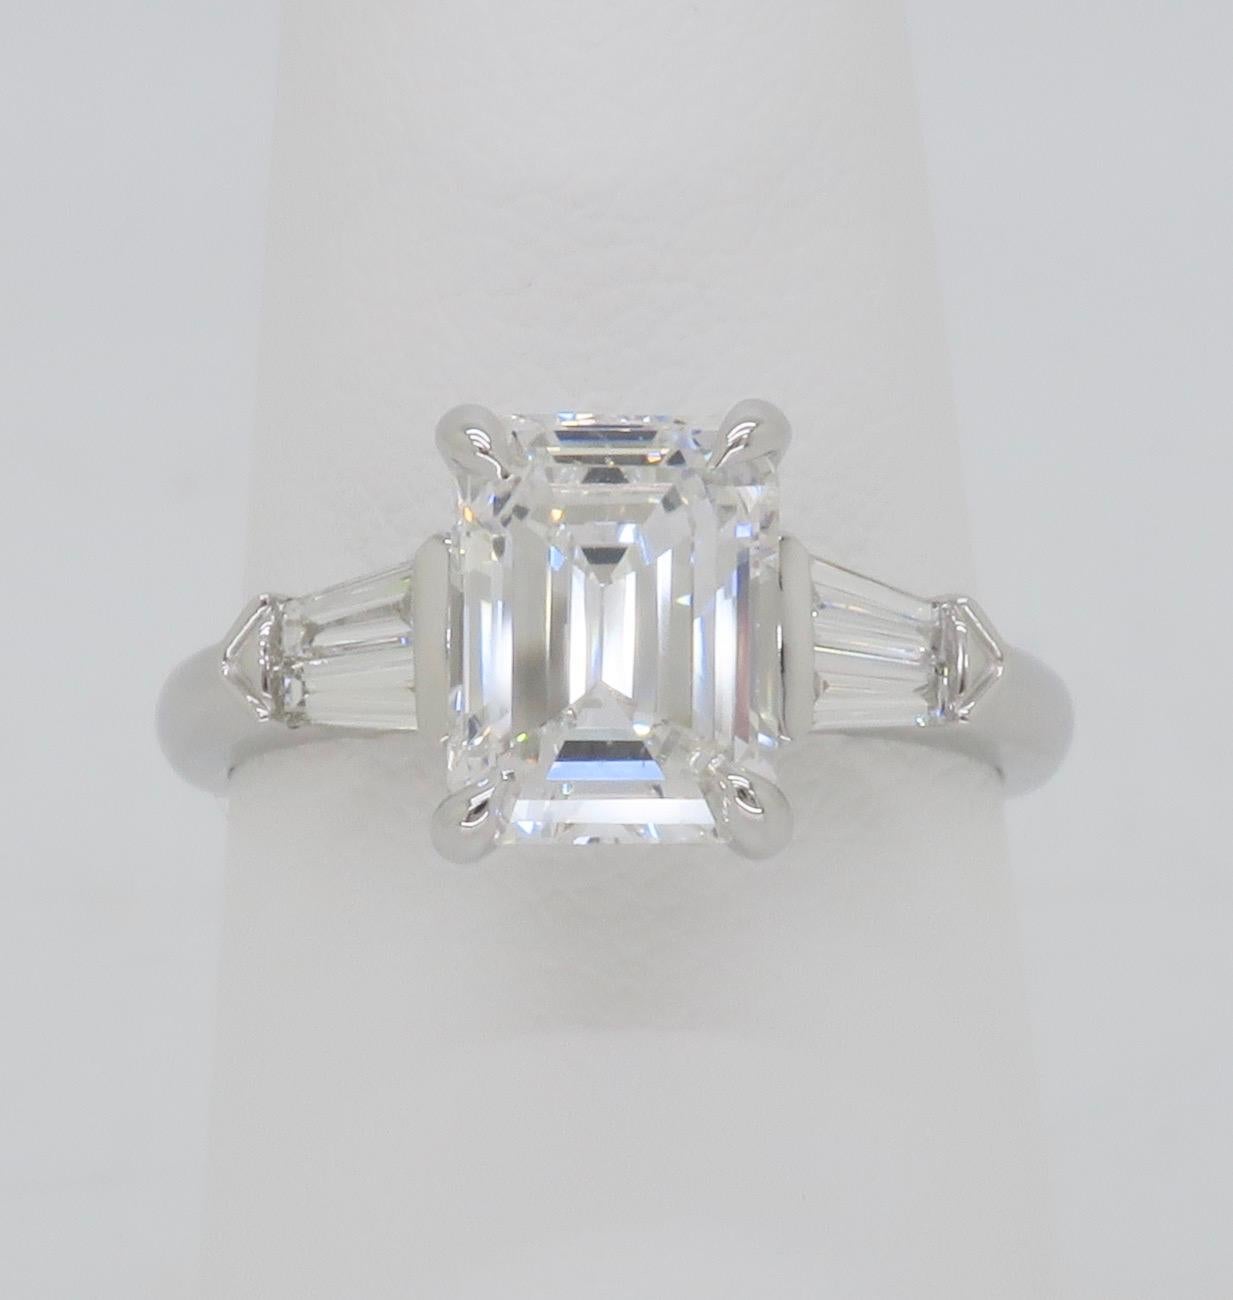 Stunning 2.19CTW Certified Emerald & Baguette cut diamond ring. 

Center Diamond Carat Weight: 1.91CT
Center Diamond Cut: Emerald Cut 
Center Diamond Color: E
Center Diamond Clarity: SI1
GIA Report Number: 5231104344
Total Diamond Carat Weight: